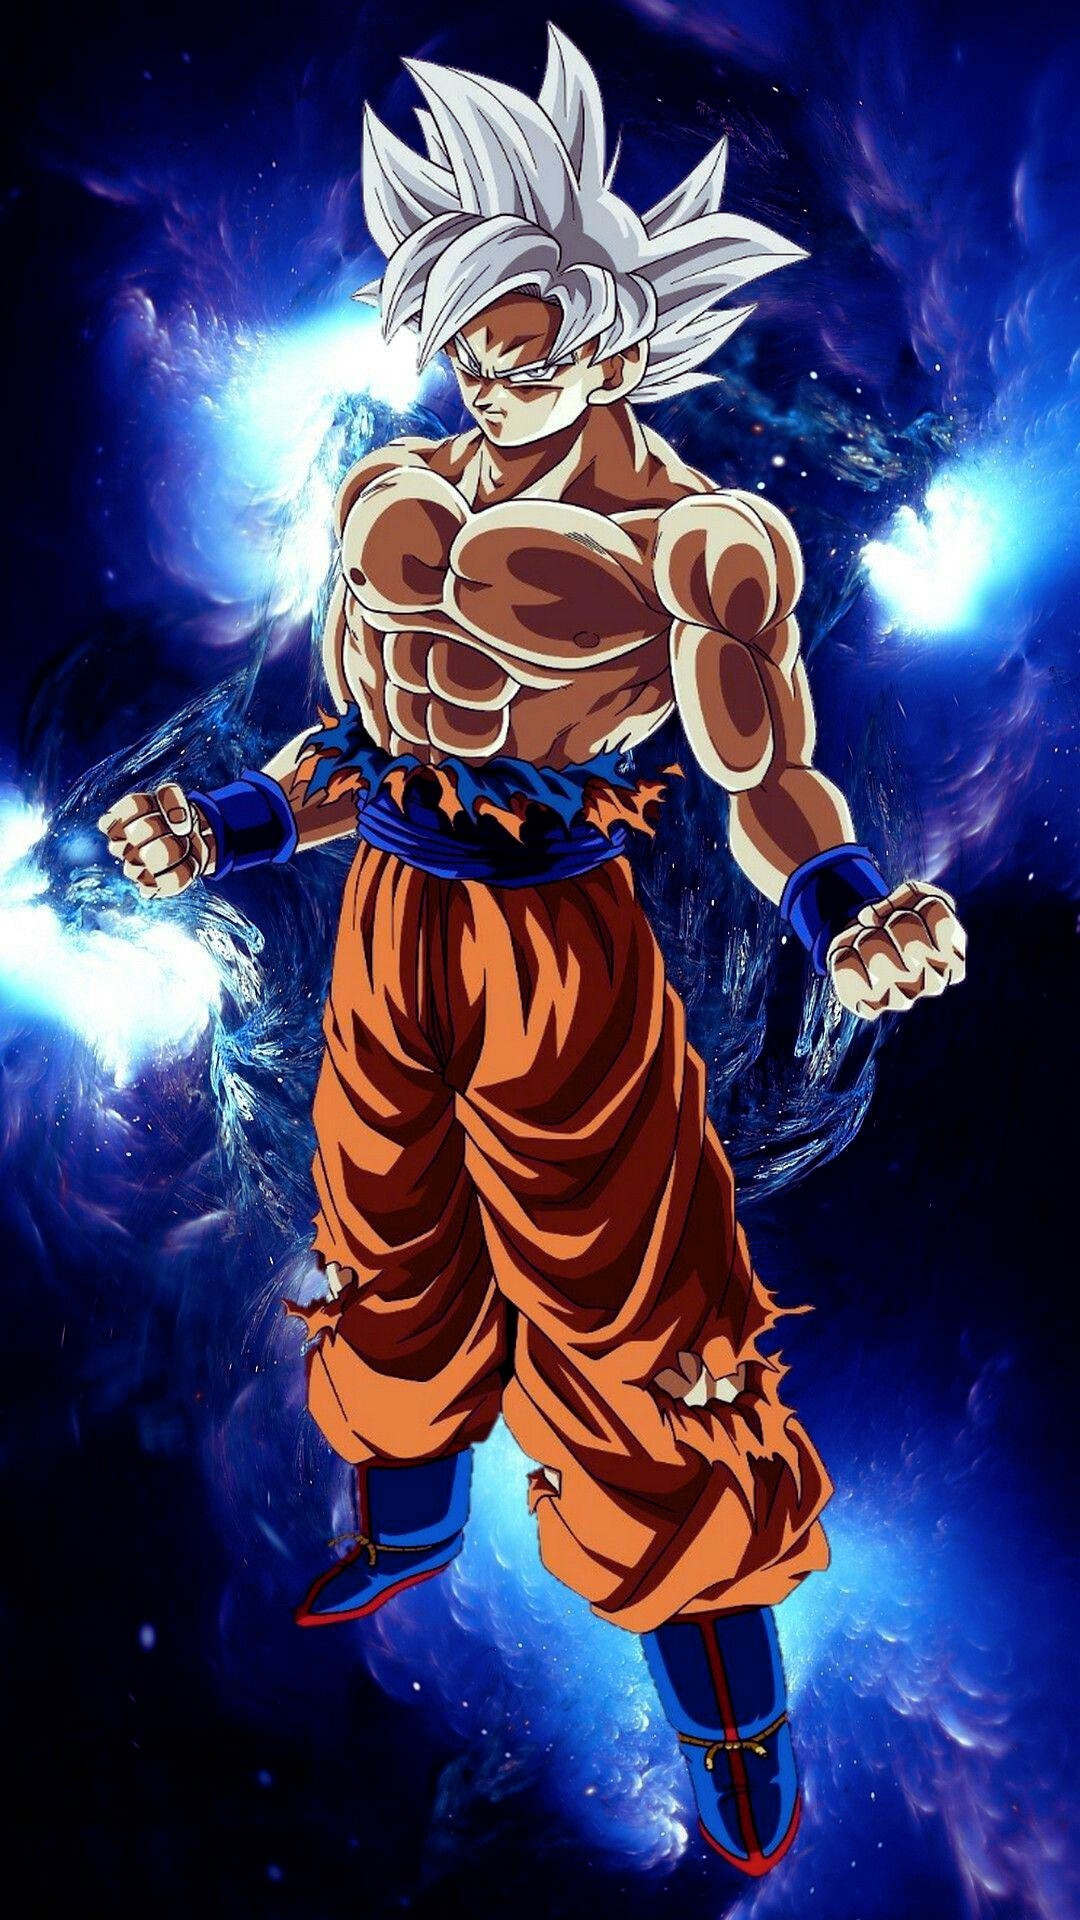 Goku power up Wallpaper Download